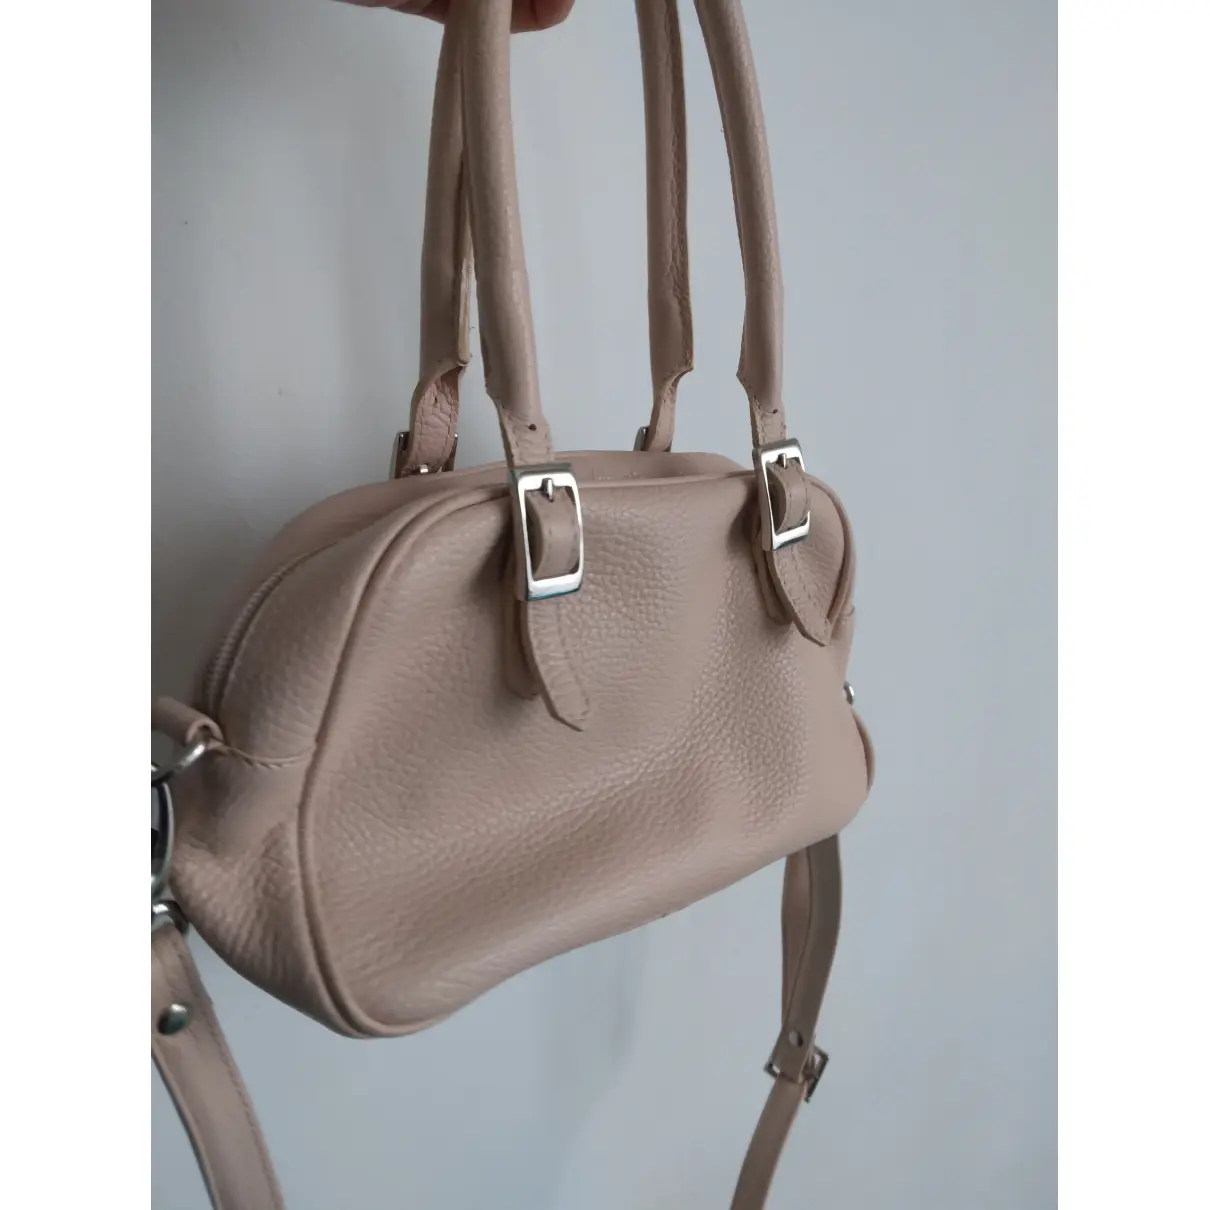 Buy FLORSHEIM Leather handbag online